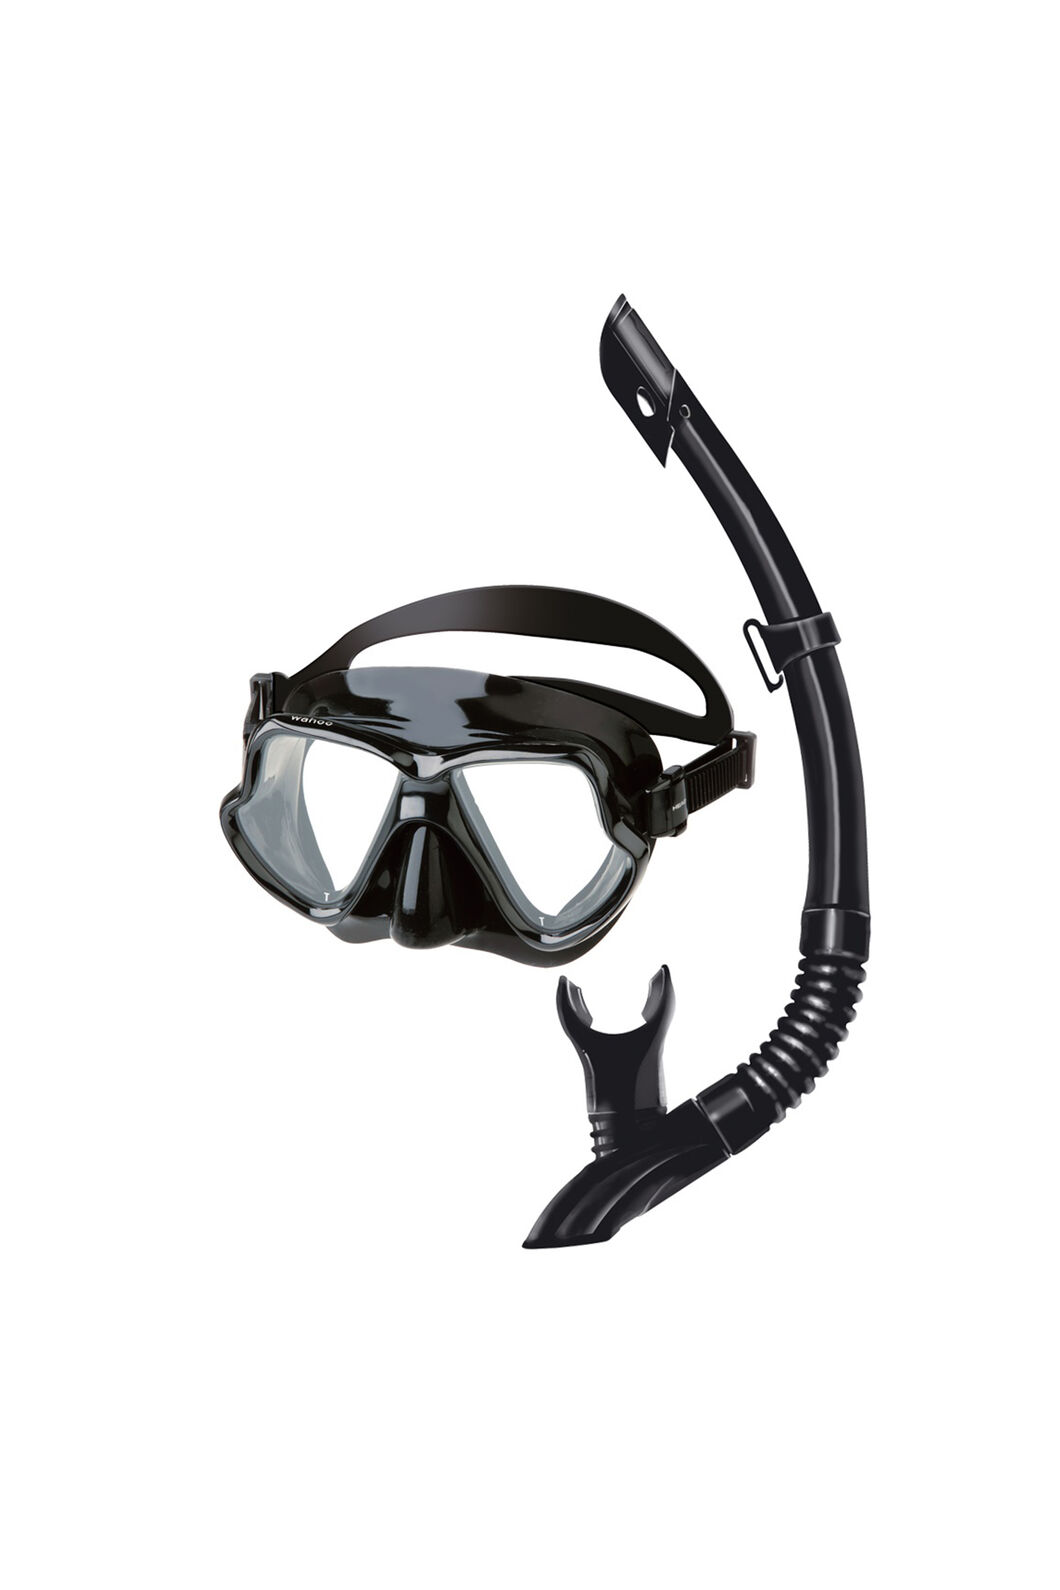 Mares Wahoo Mask and Snorkel Combo, Black, hi-res